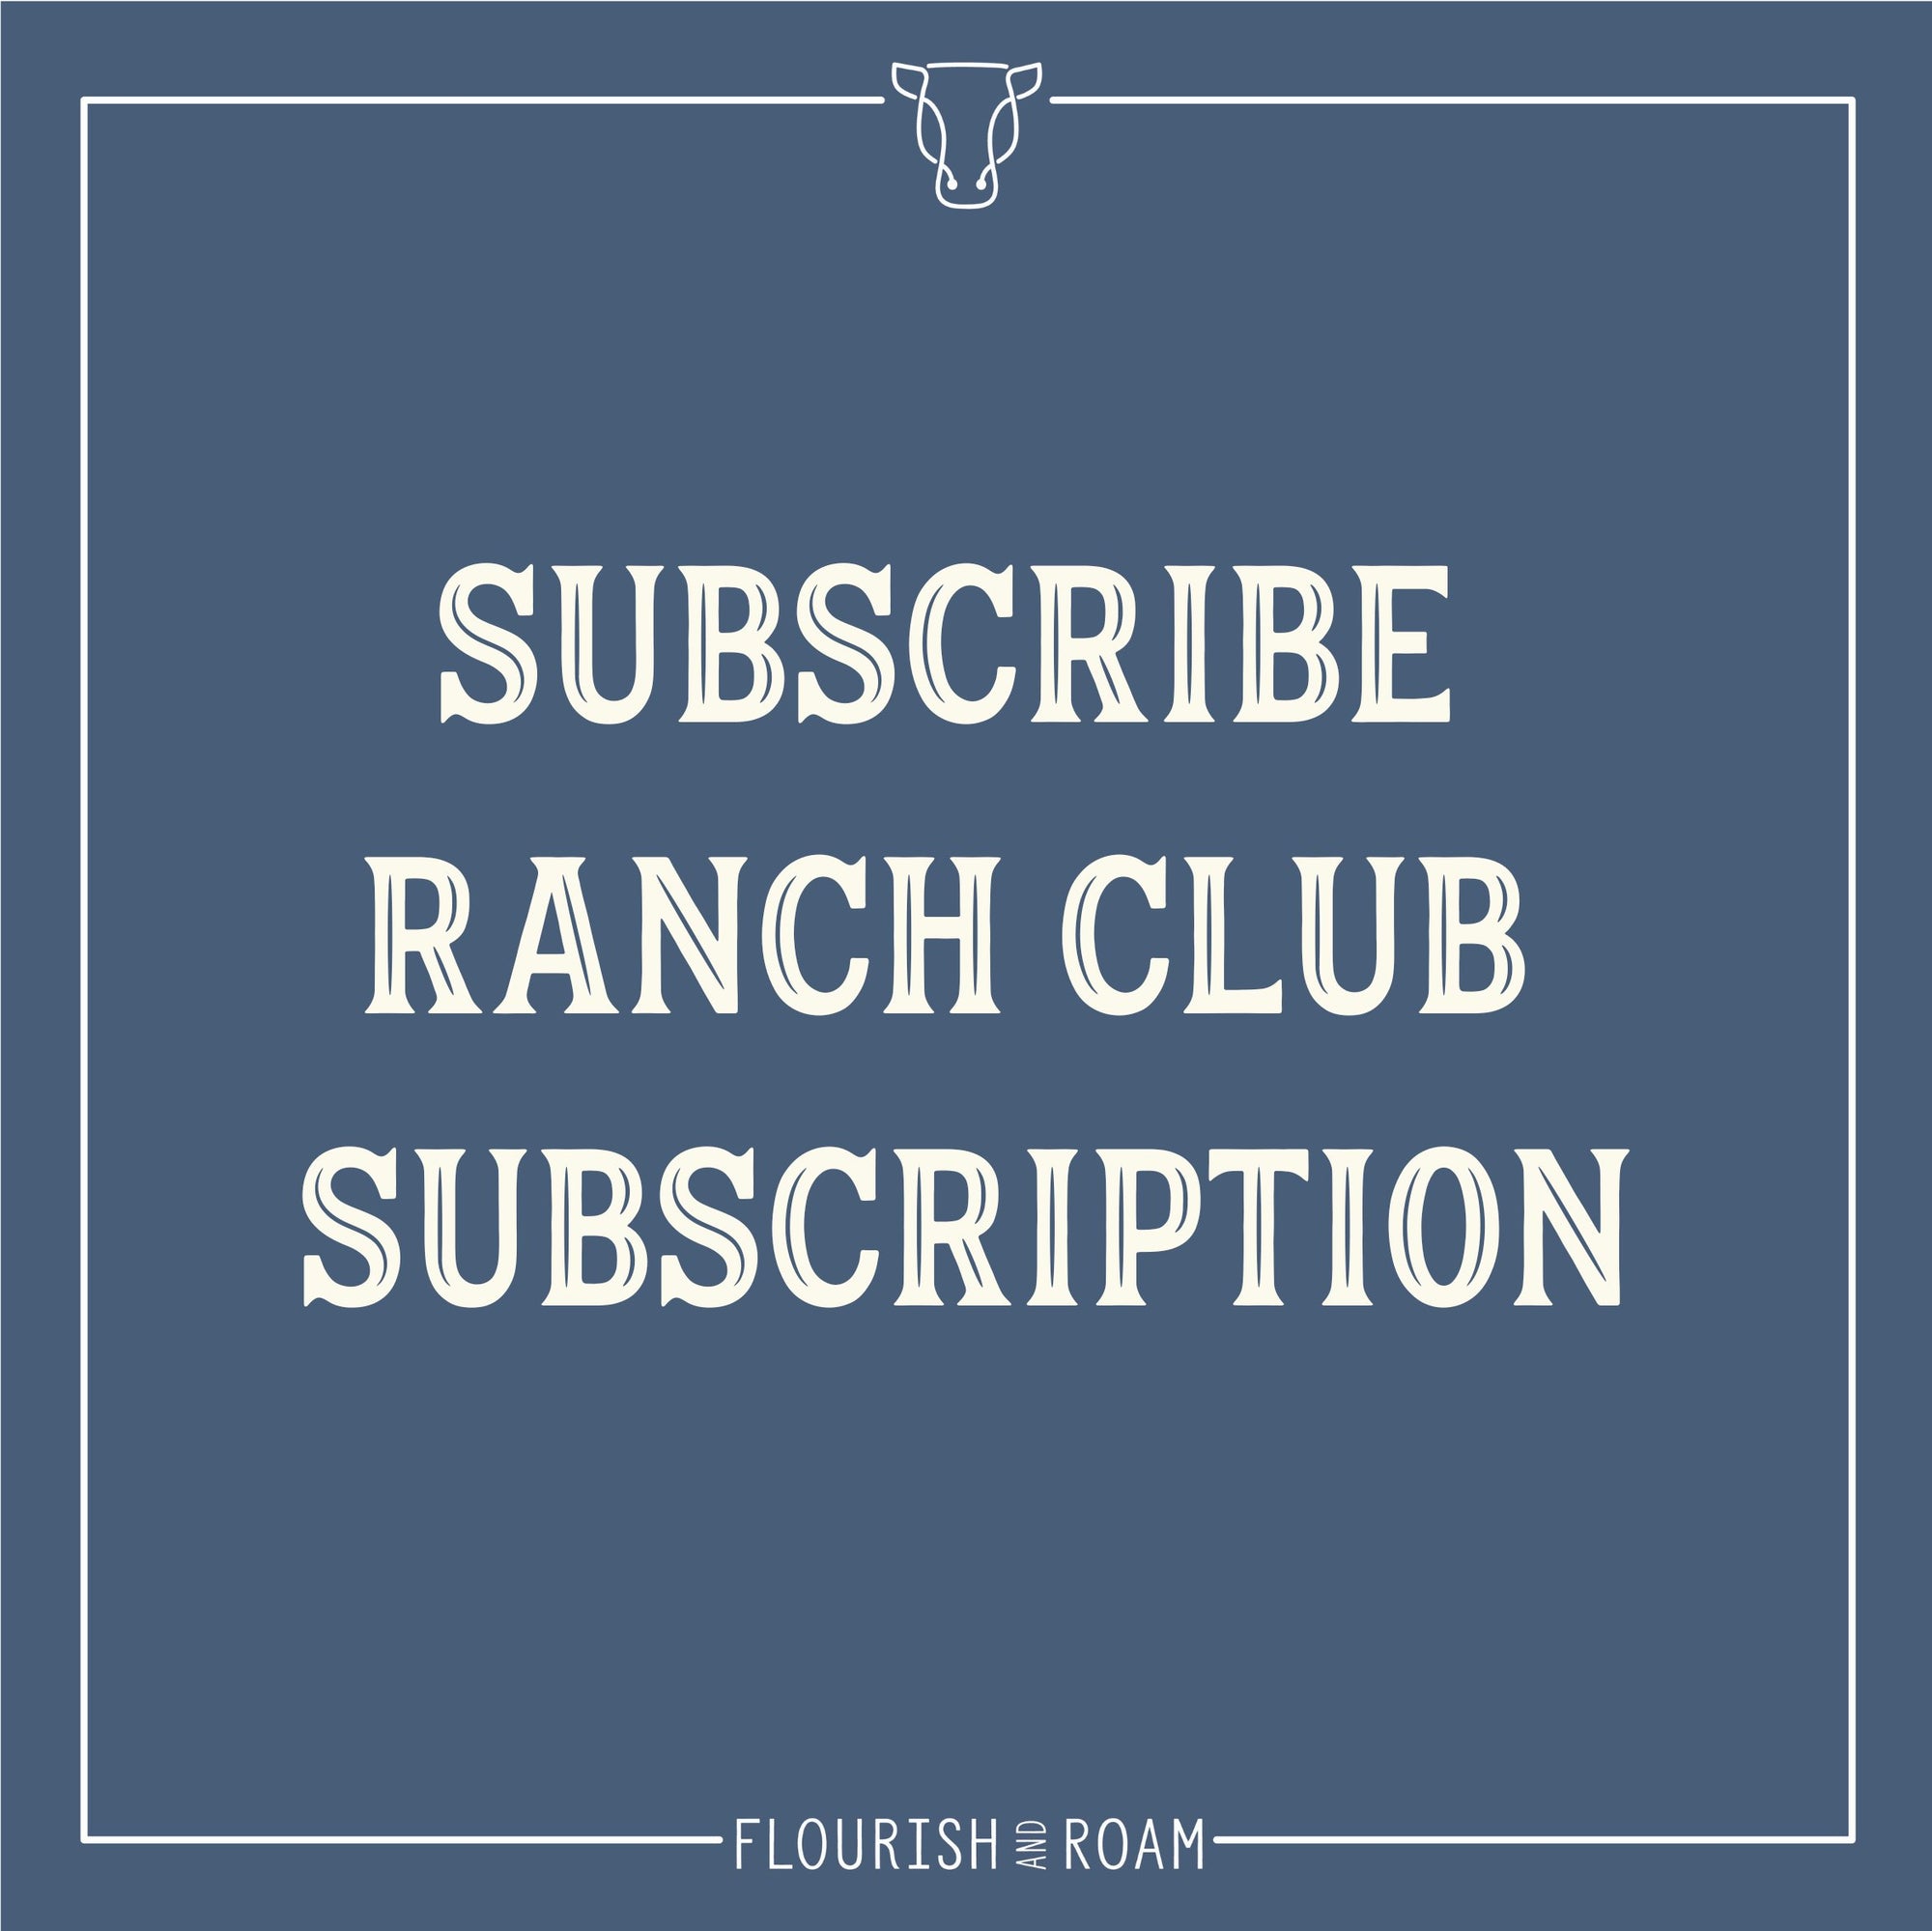 Ranch Club Subscription